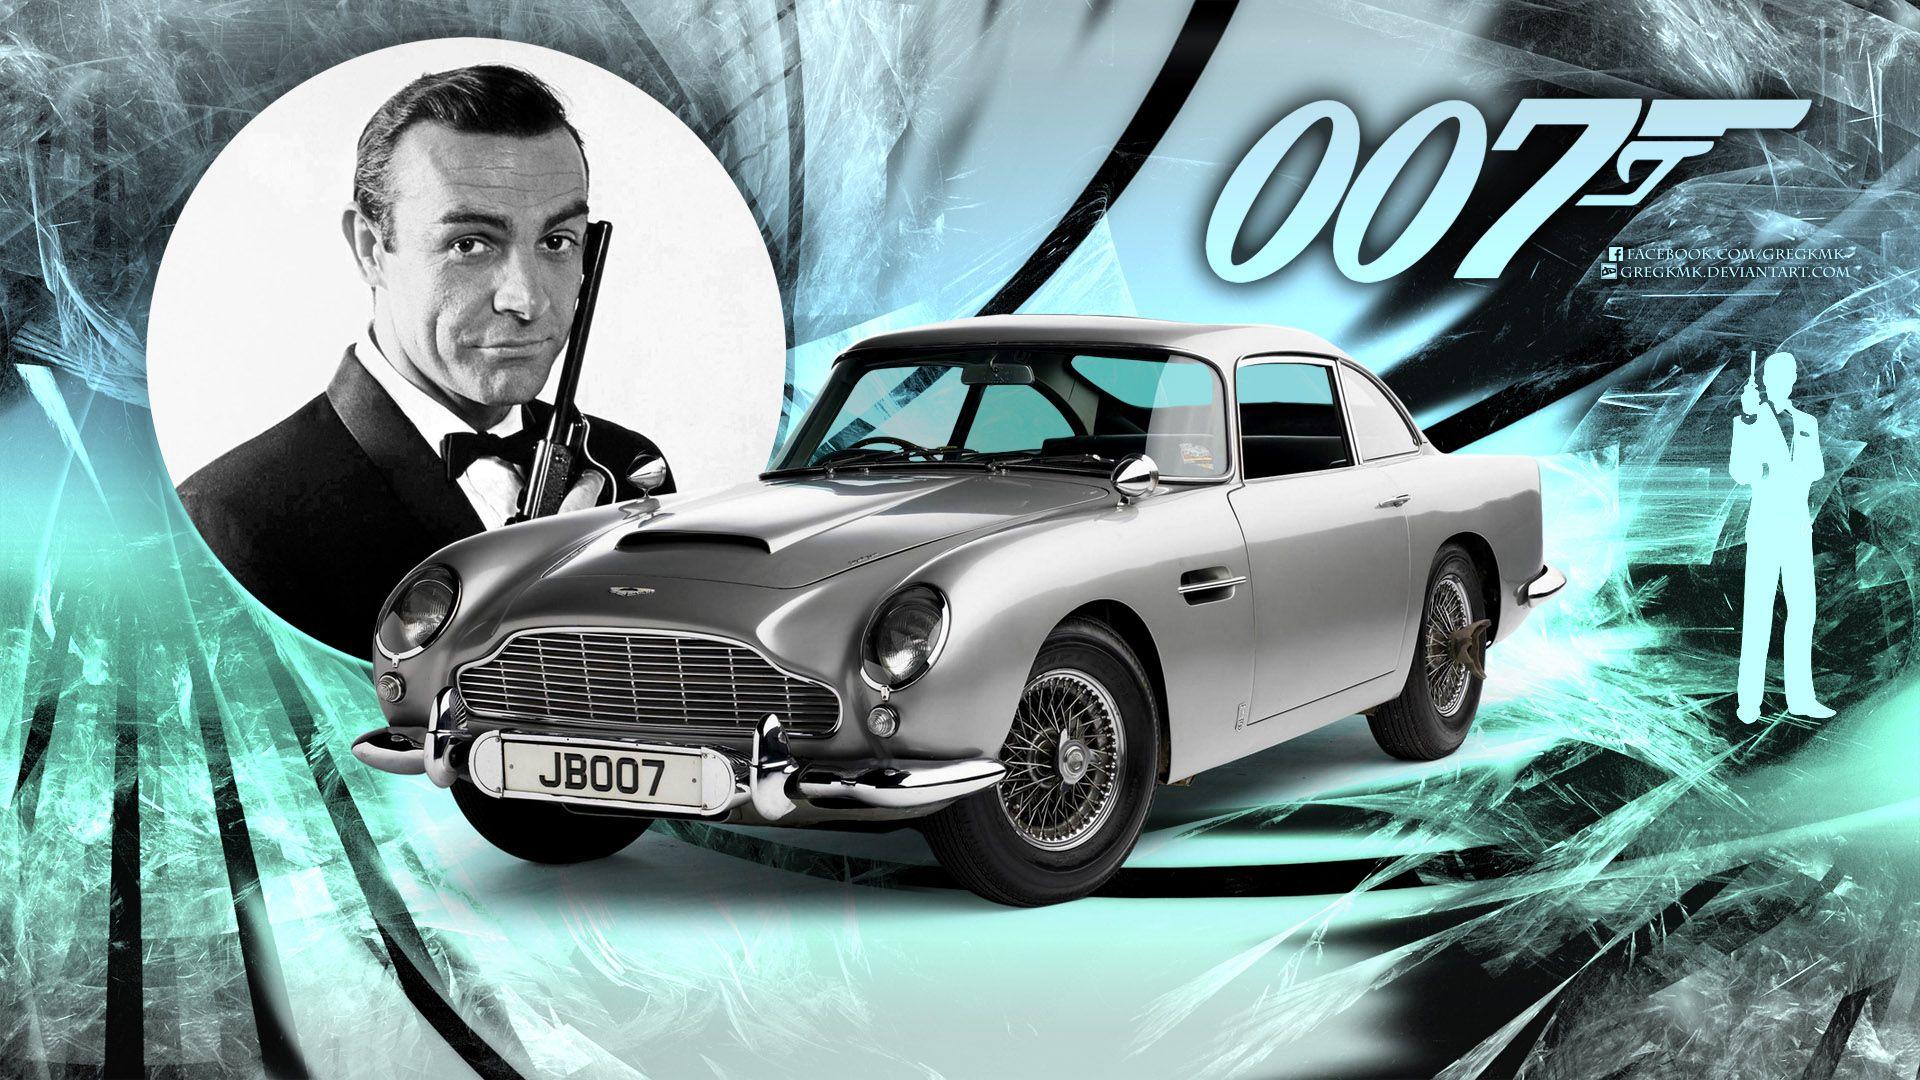 James Bond 007 HD Wallpaper. Background Imagex1080